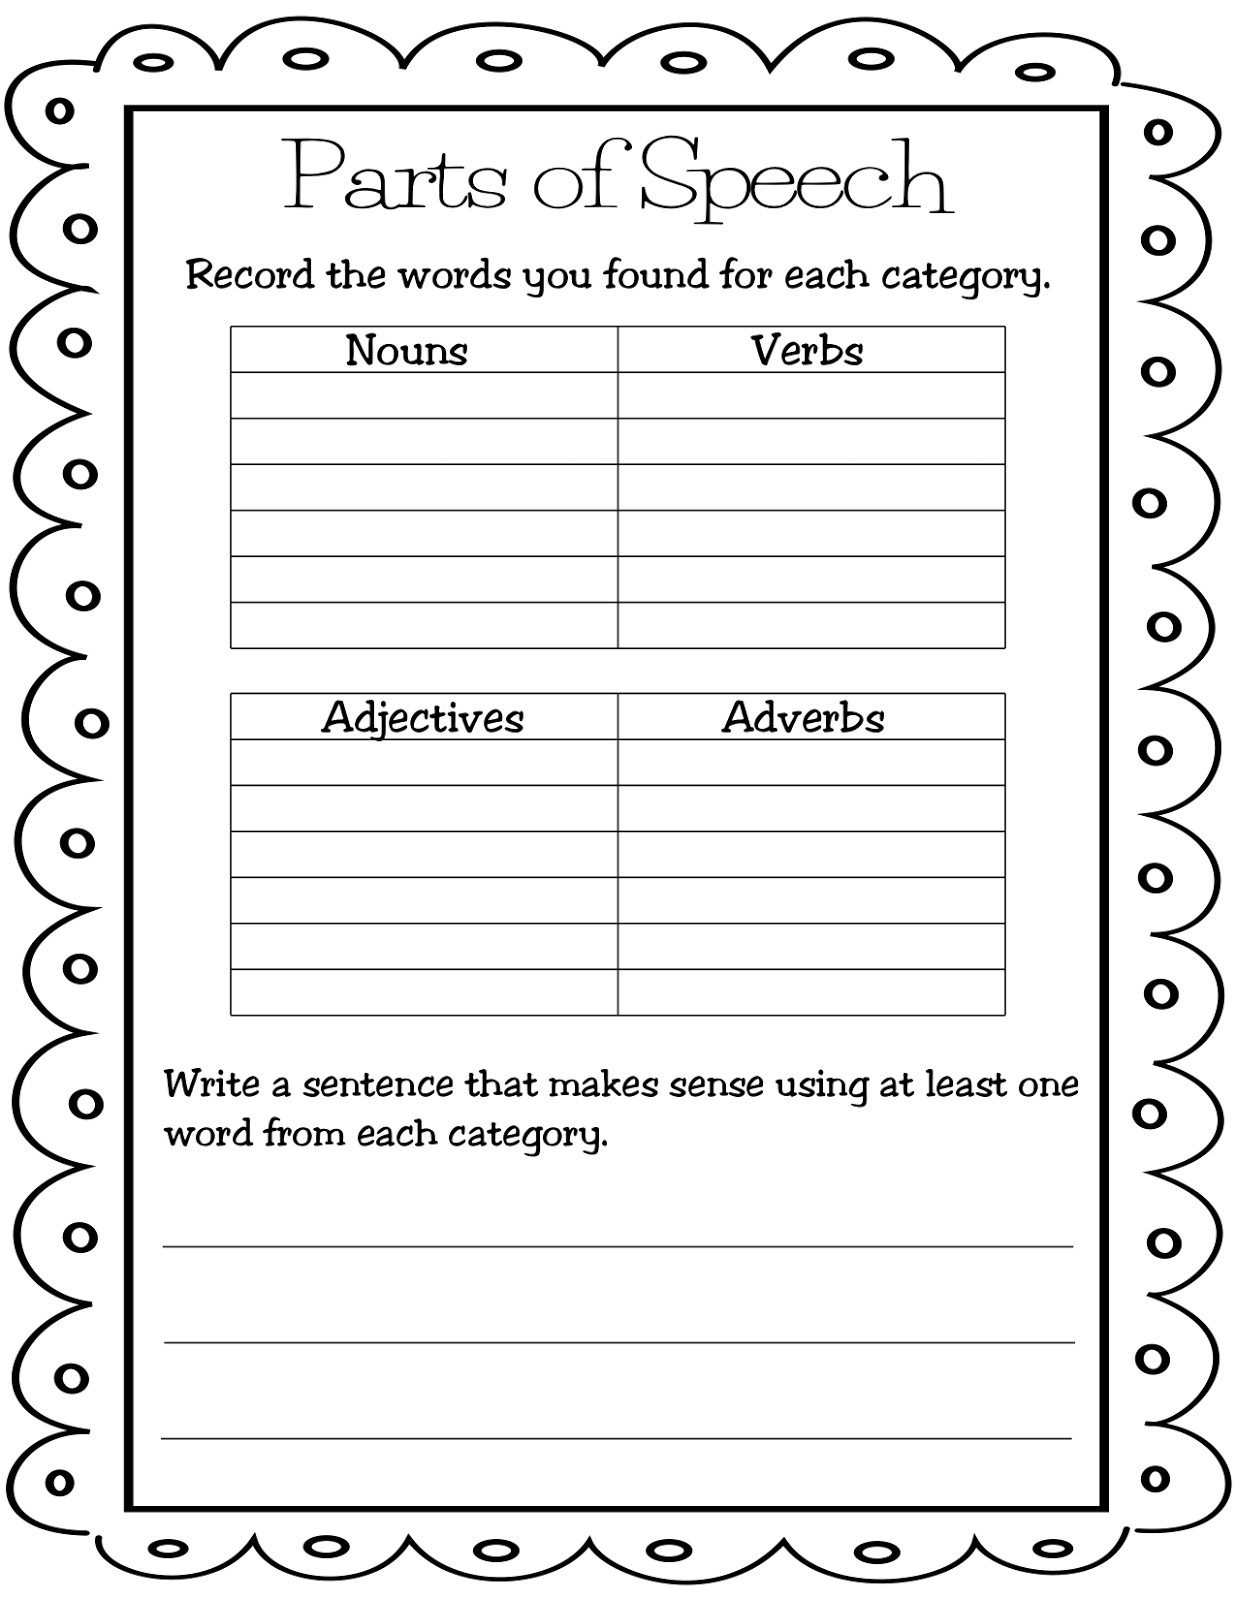 english-unite-parts-of-speech-worksheet